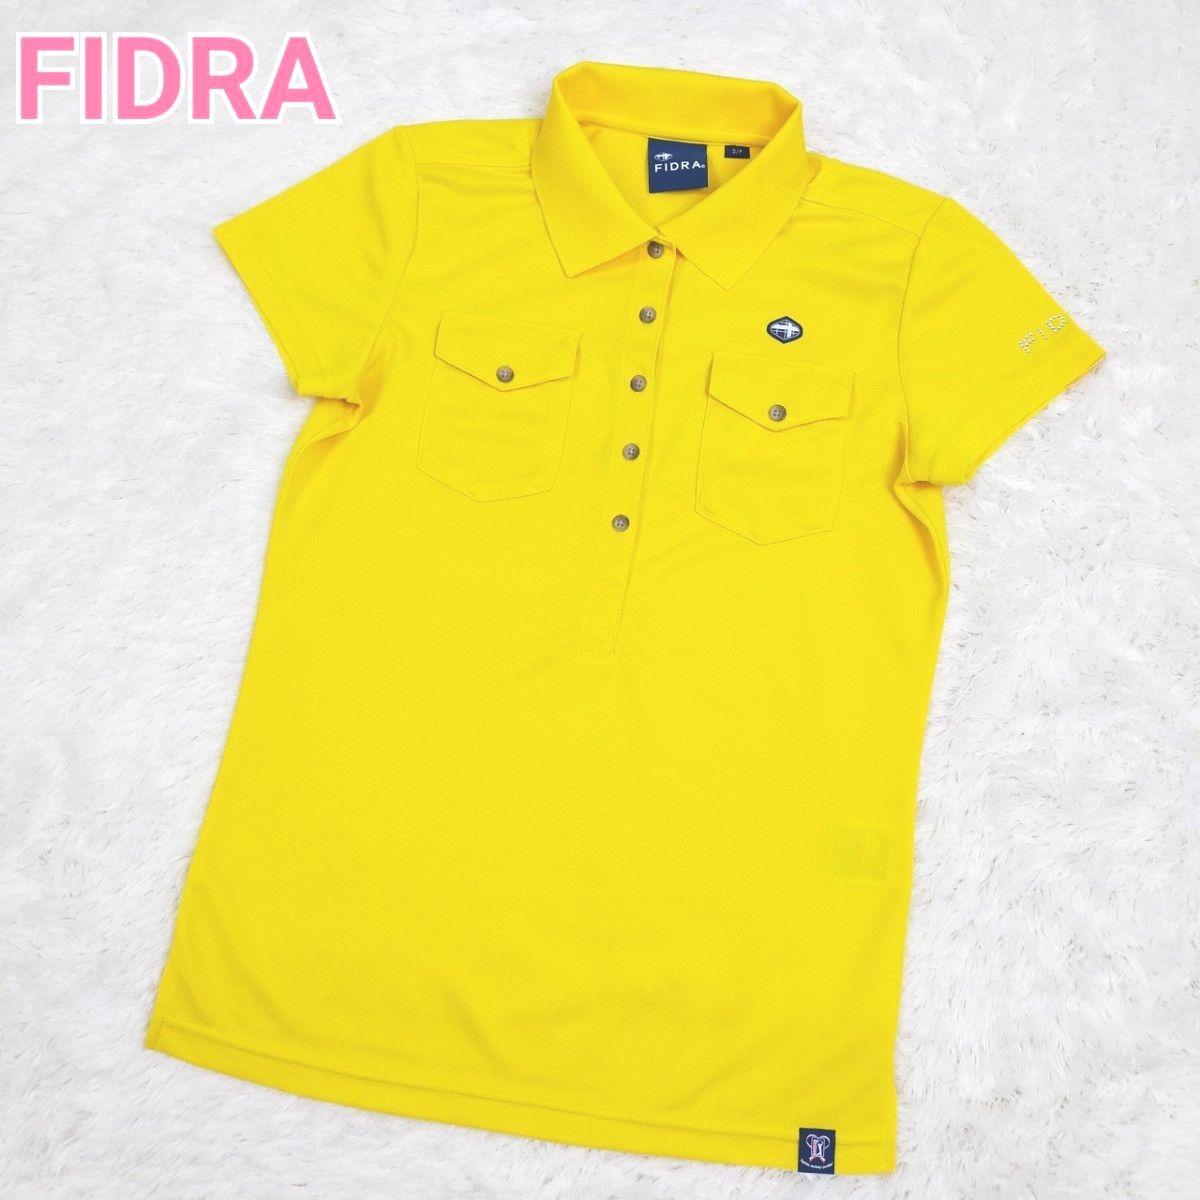 FIDRA フィドラ ゴルフウェア ゴルフシャツ ポロシャツ 半袖 黄色 吸汗速乾ドライ ストレッチ レディース Sサイズ